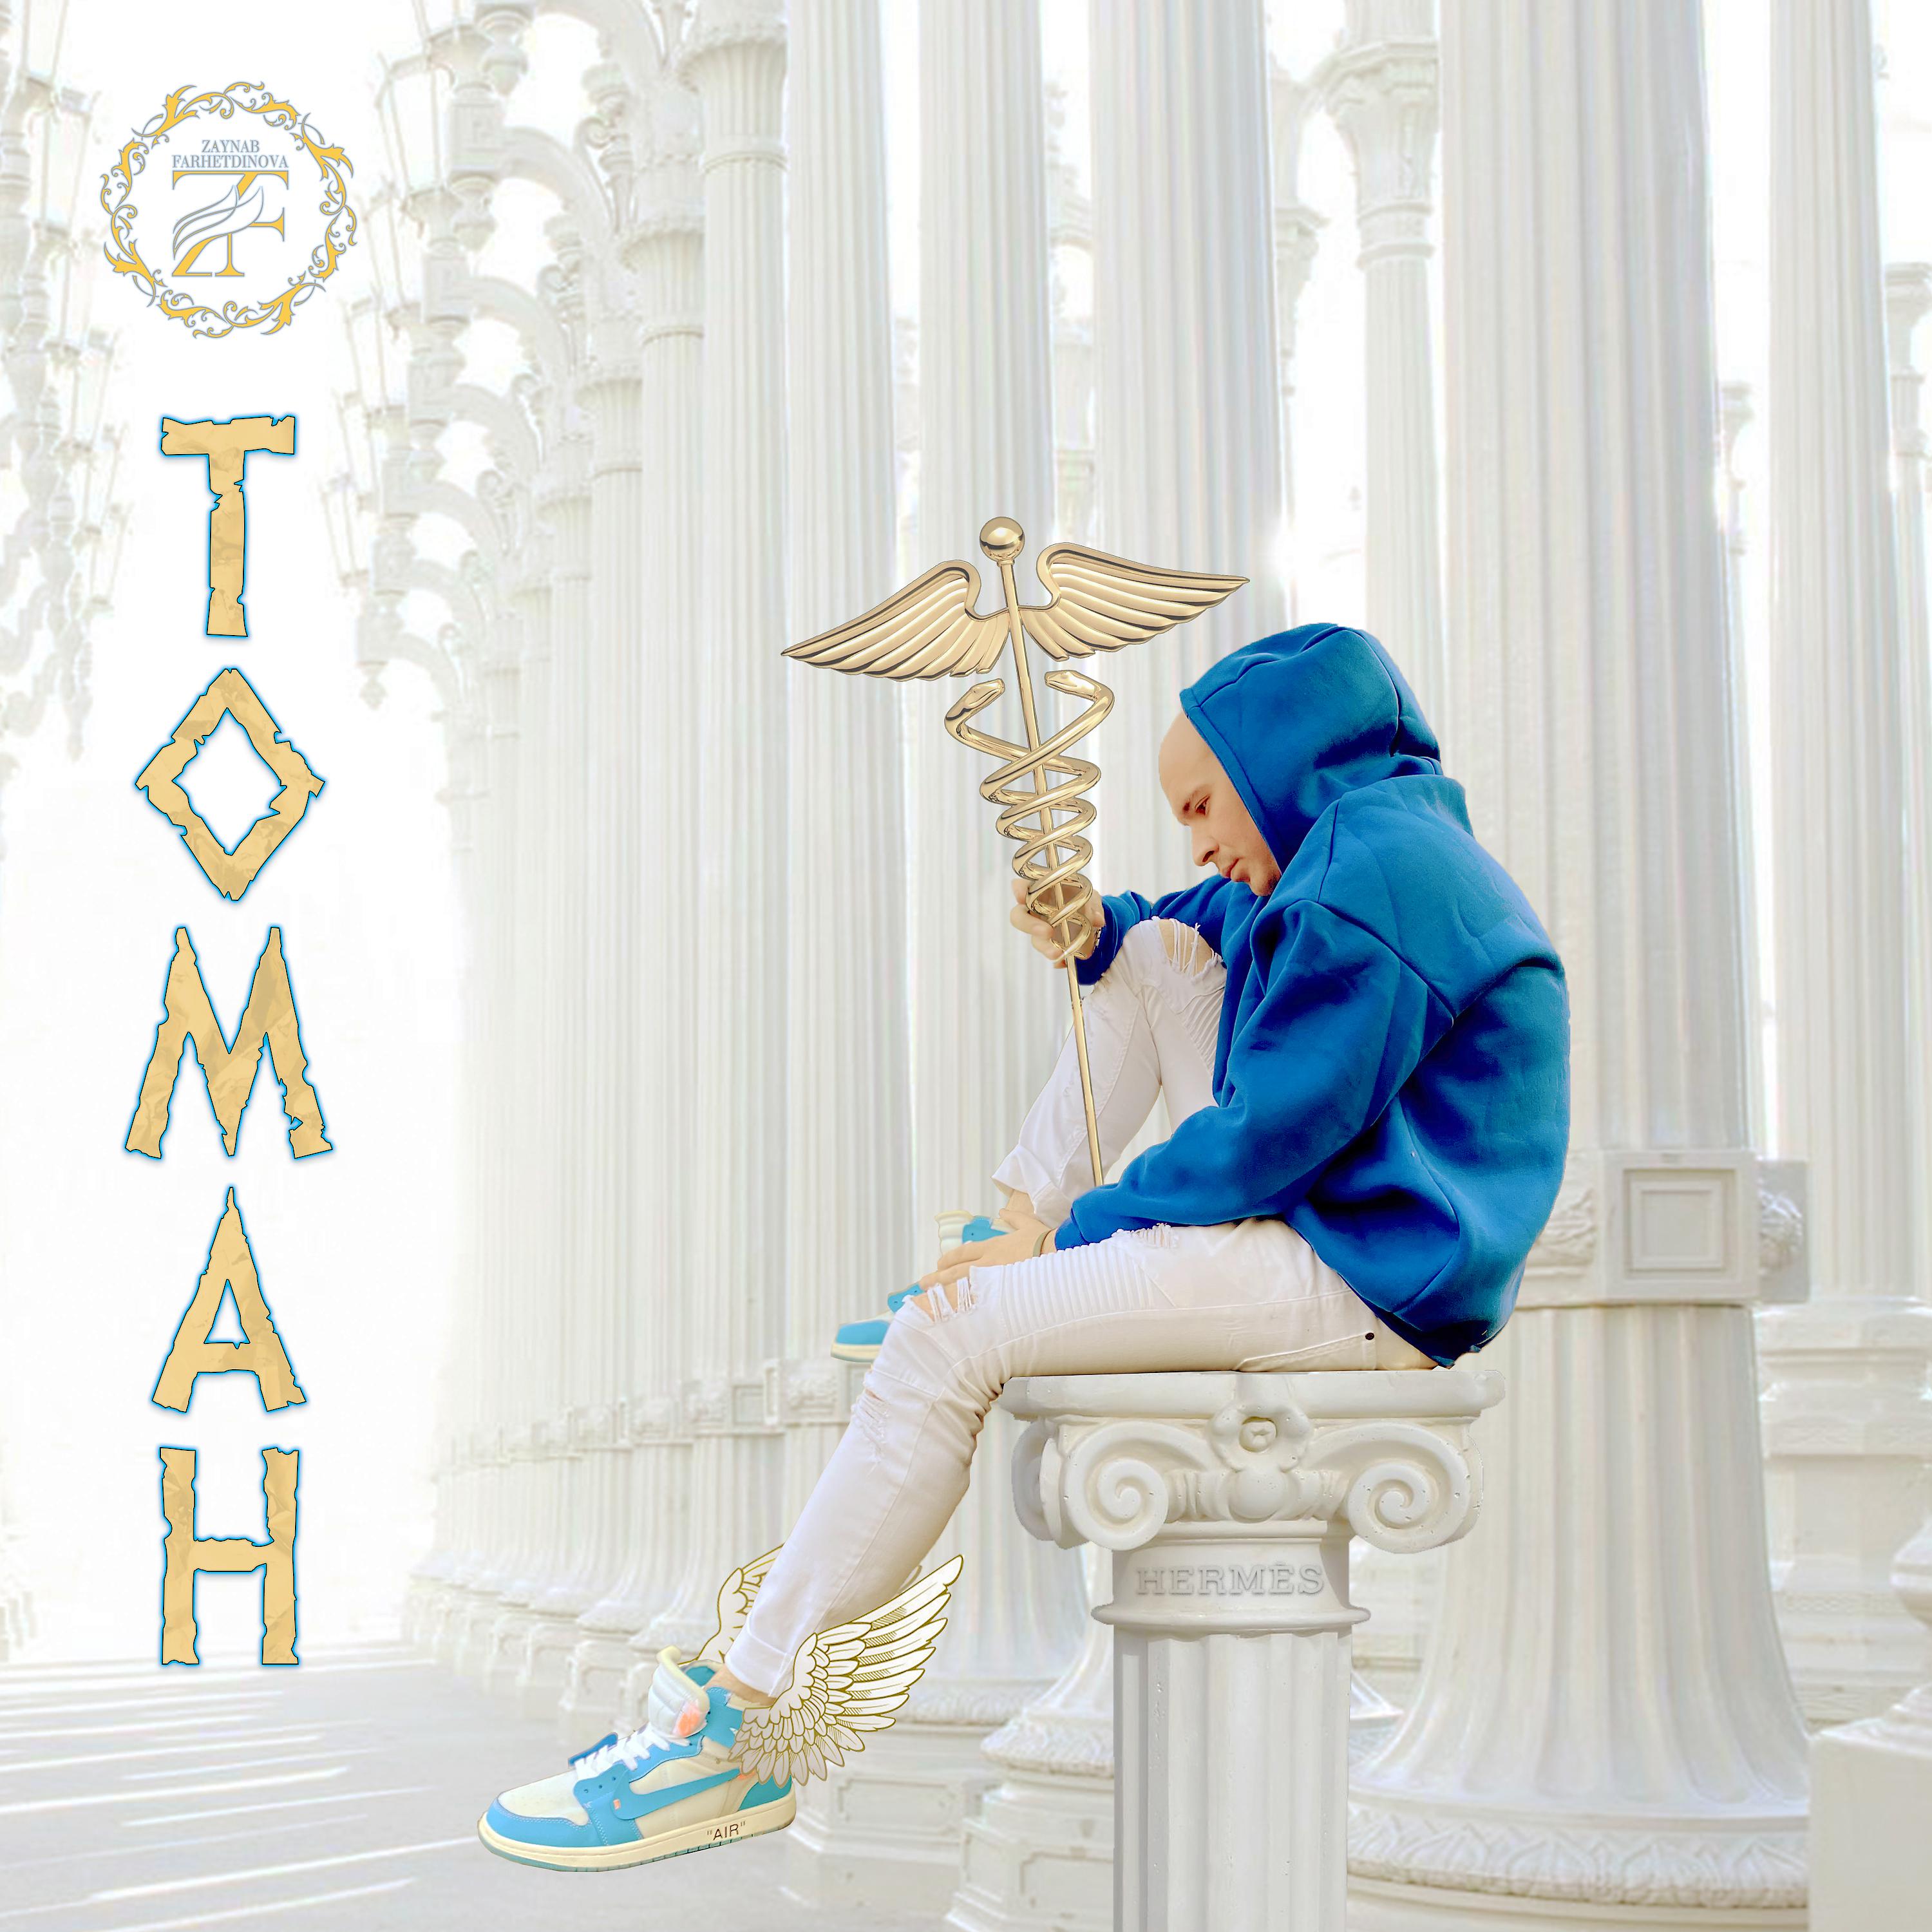 Постер альбома Томан